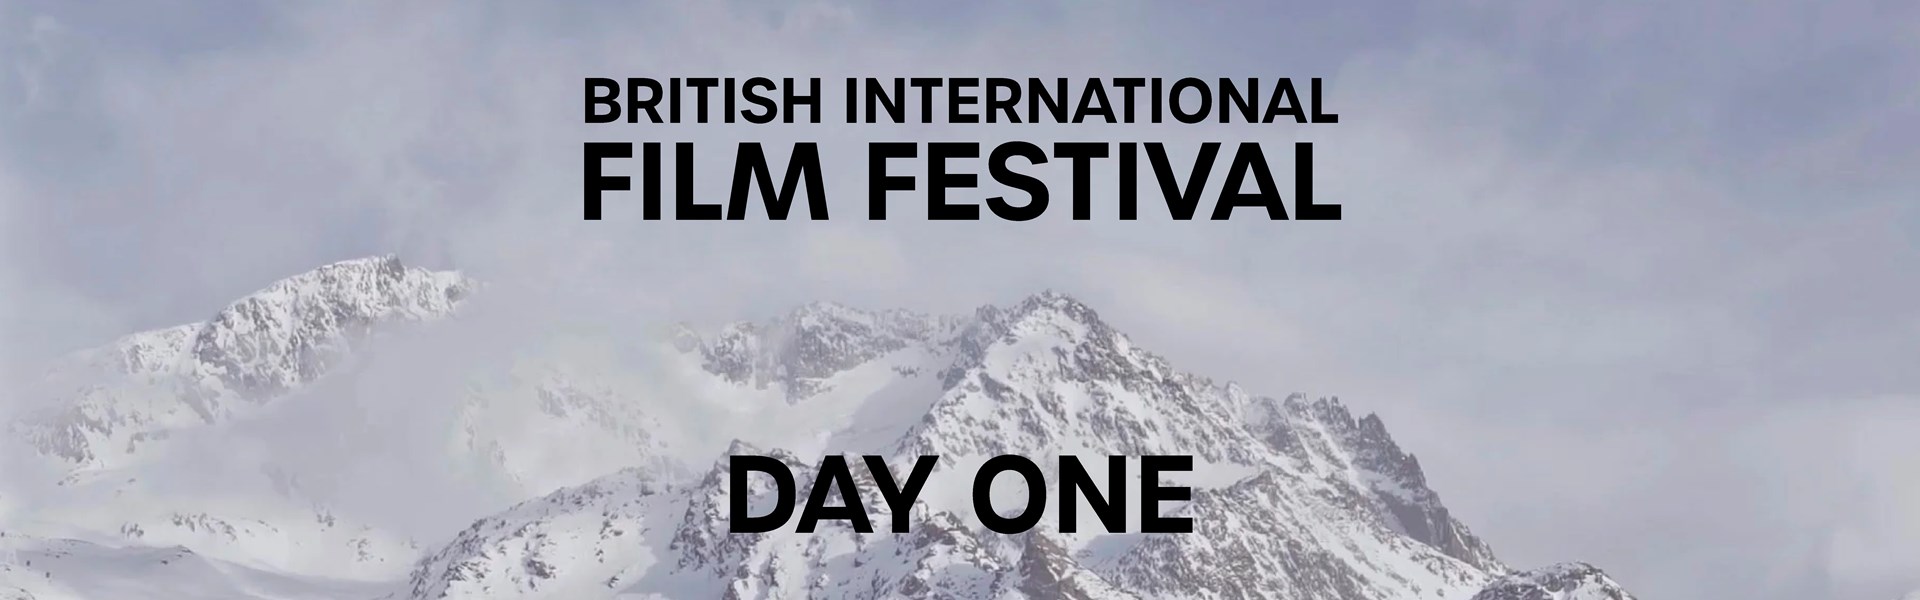 British International Film Festival Day 1